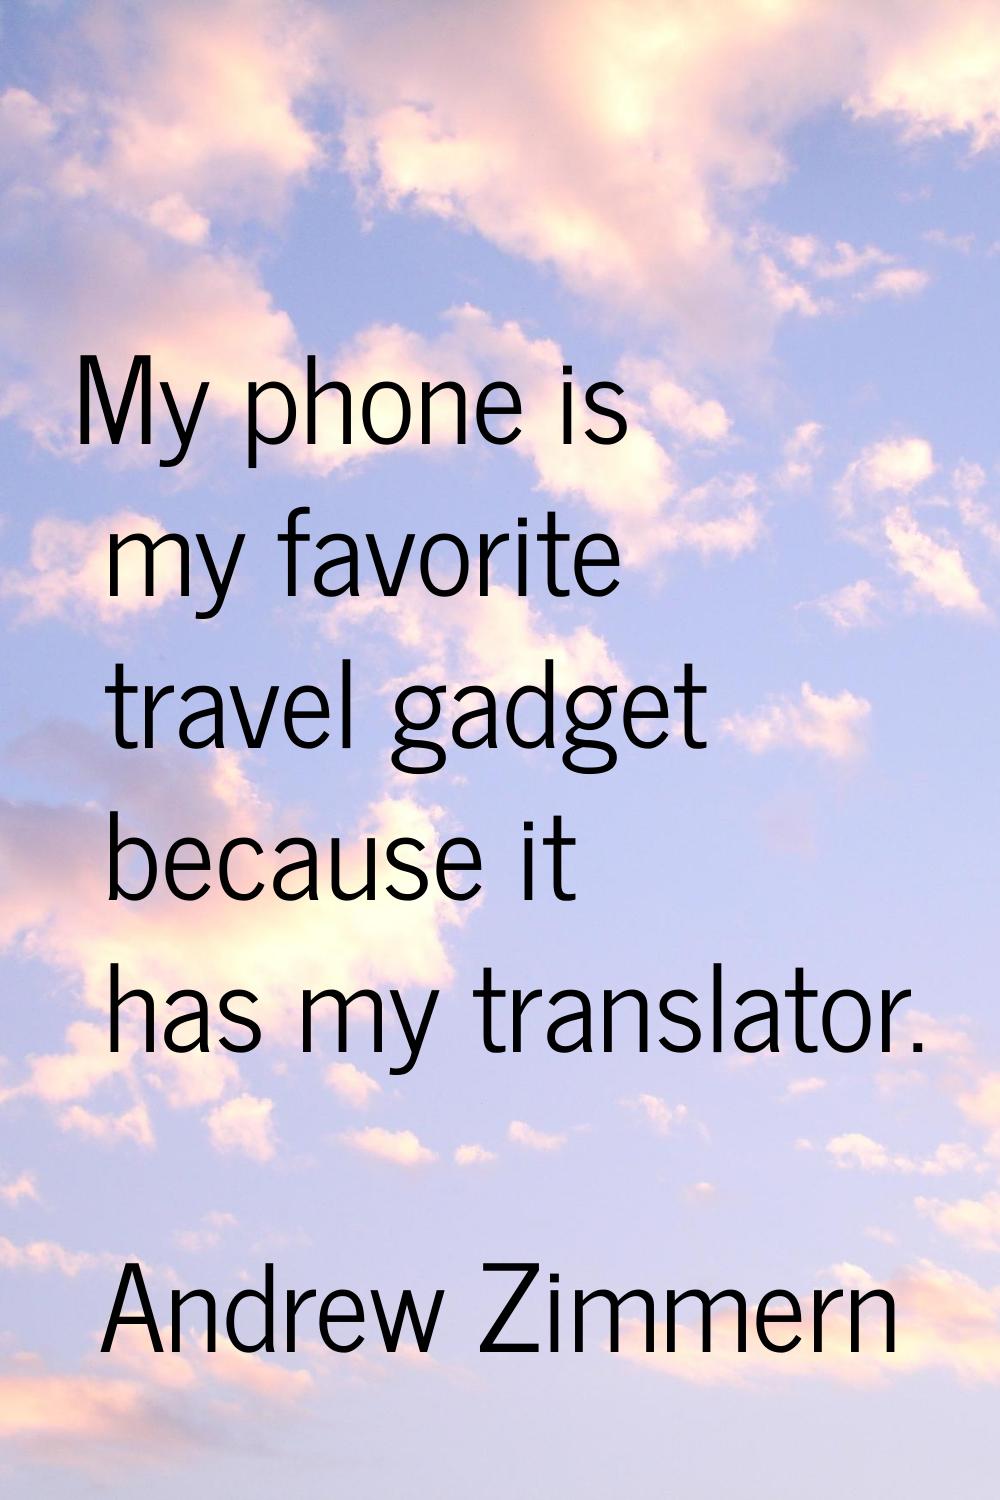 My phone is my favorite travel gadget because it has my translator.